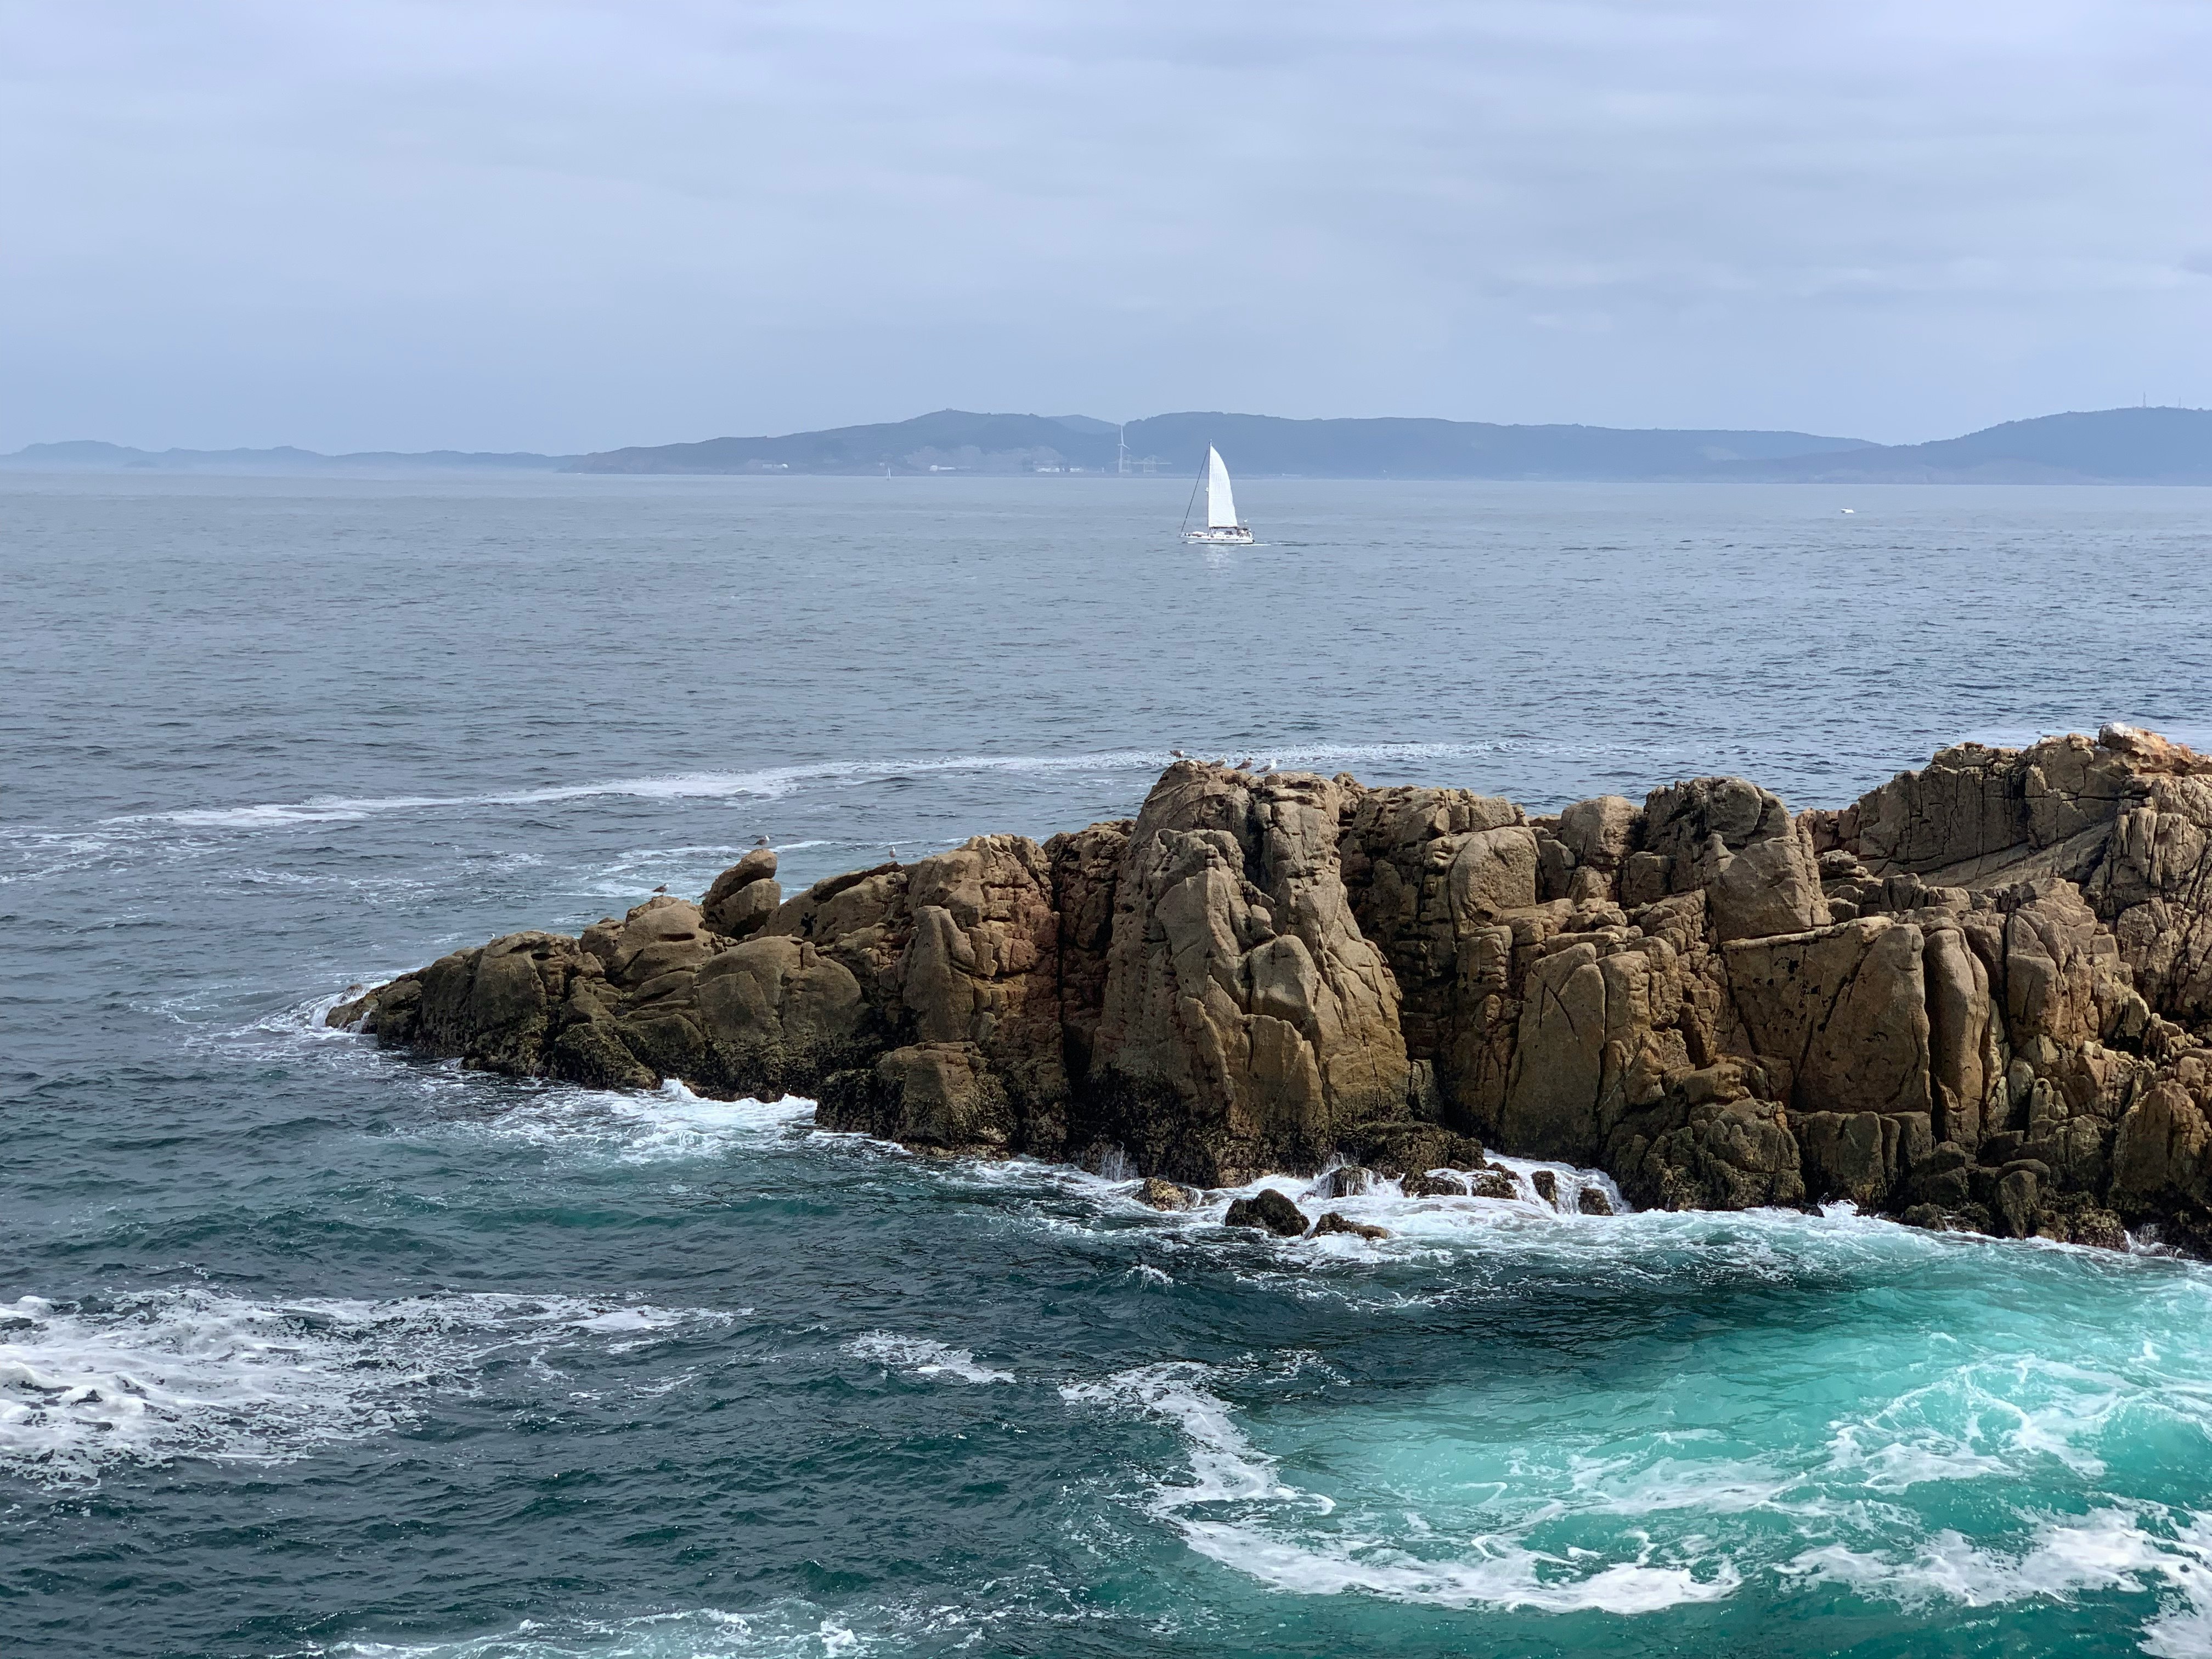 Coast of A Coruña. North of Spain. View of a sailing boat